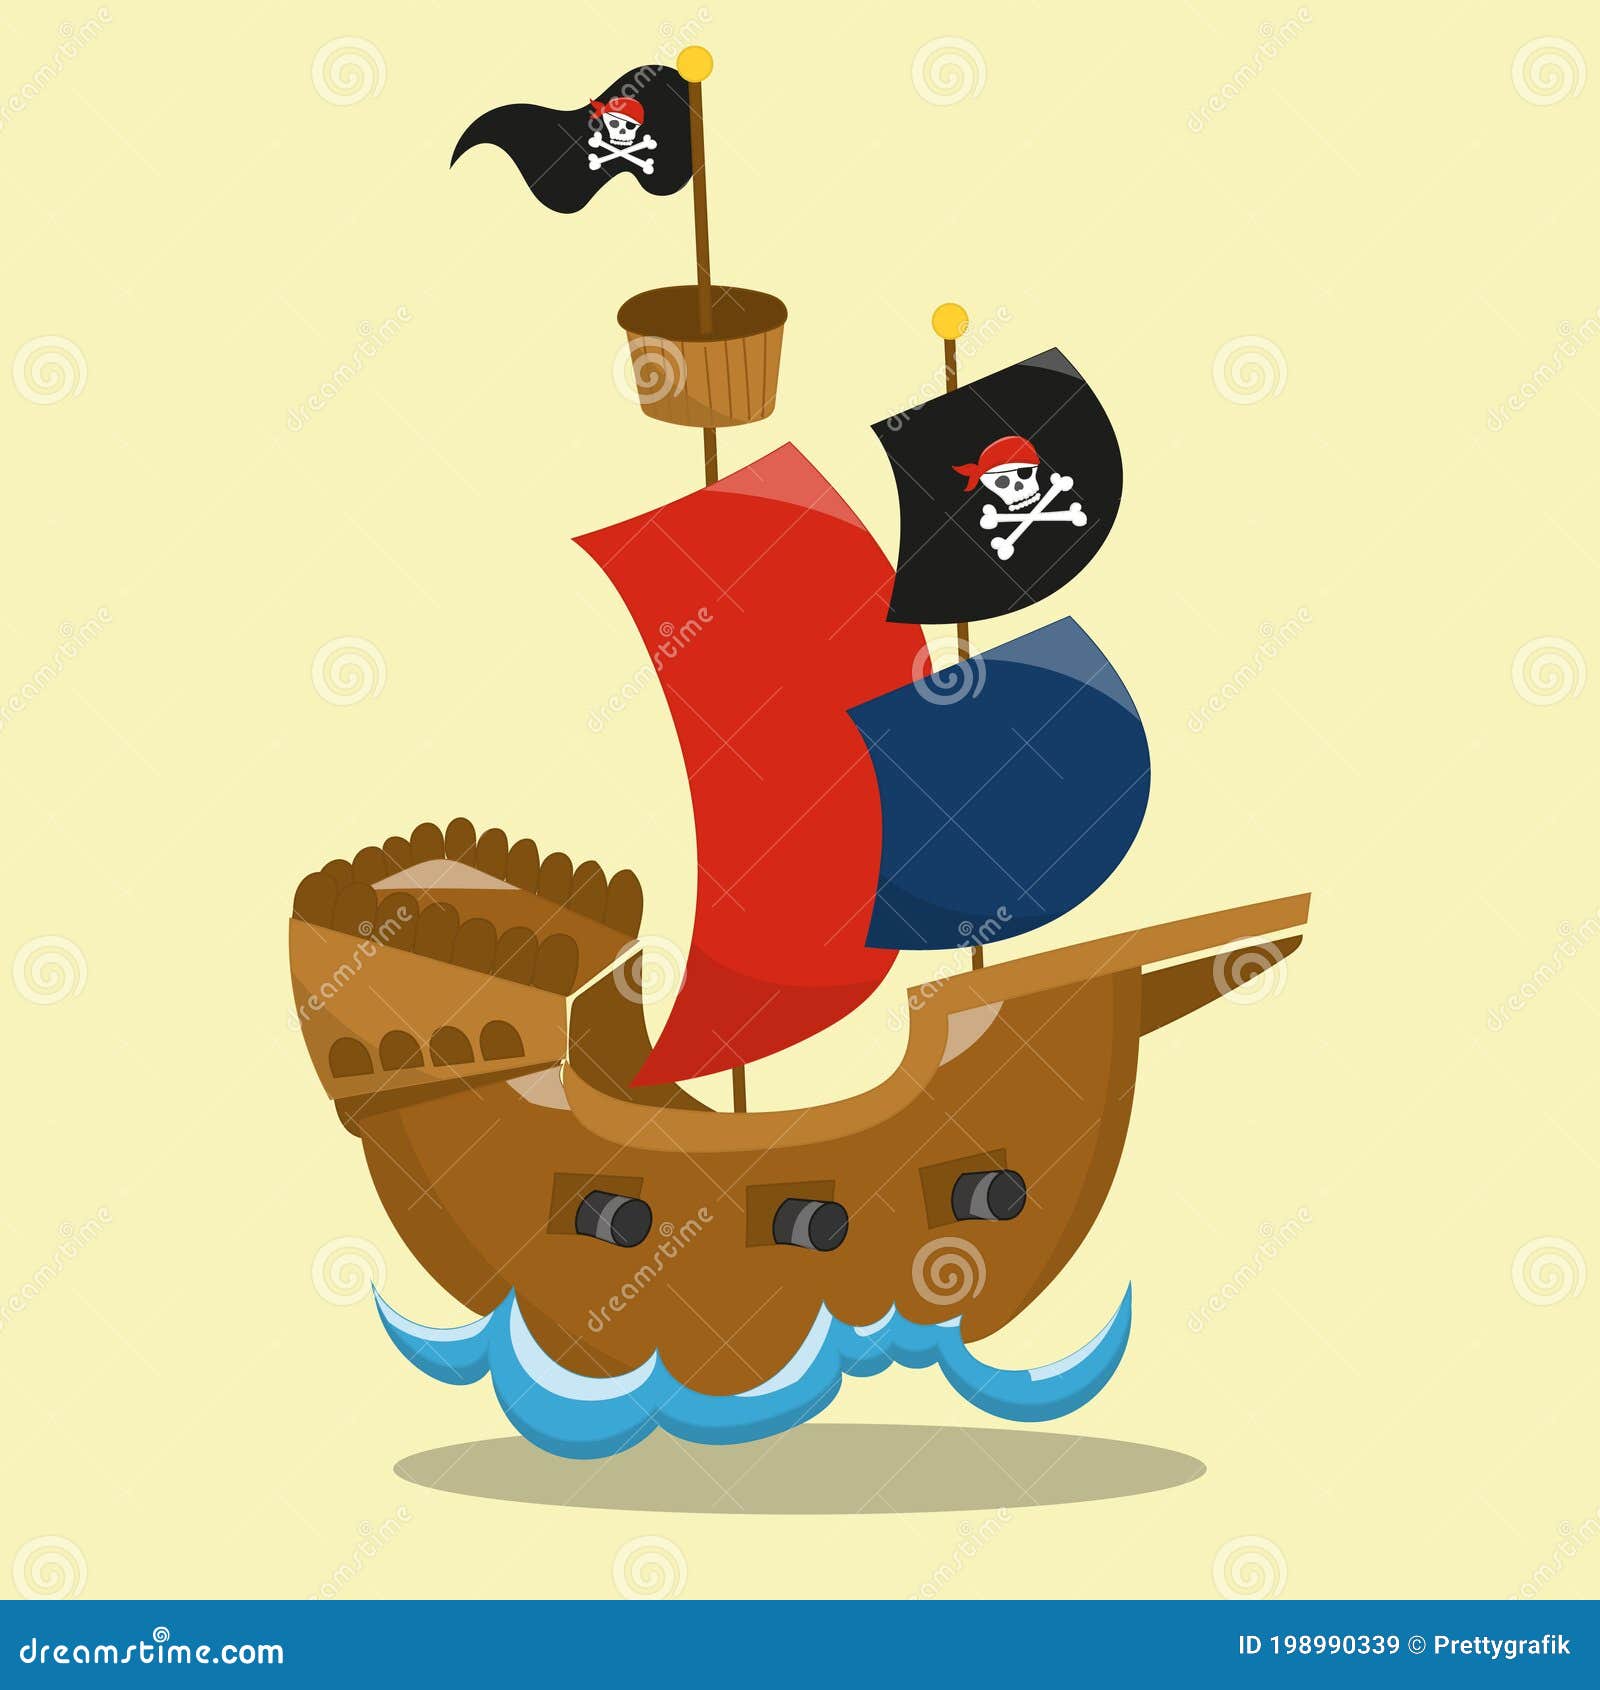 Pirates ship 03 stock vector. Illustration of cartoon - 198990339